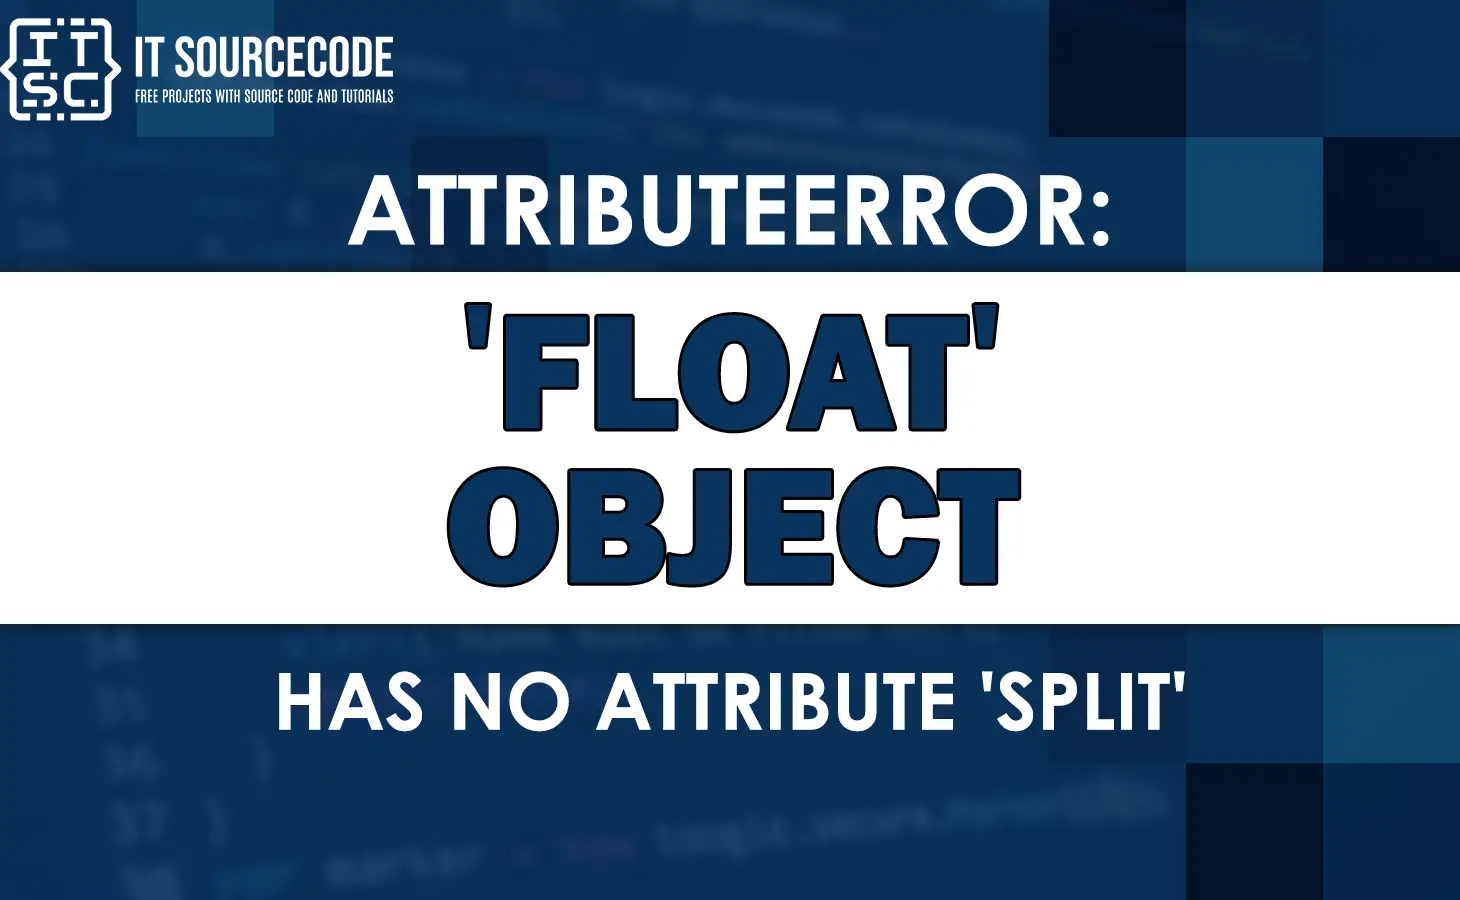 Attributeerror: float object has no attribute split [SOLVED]